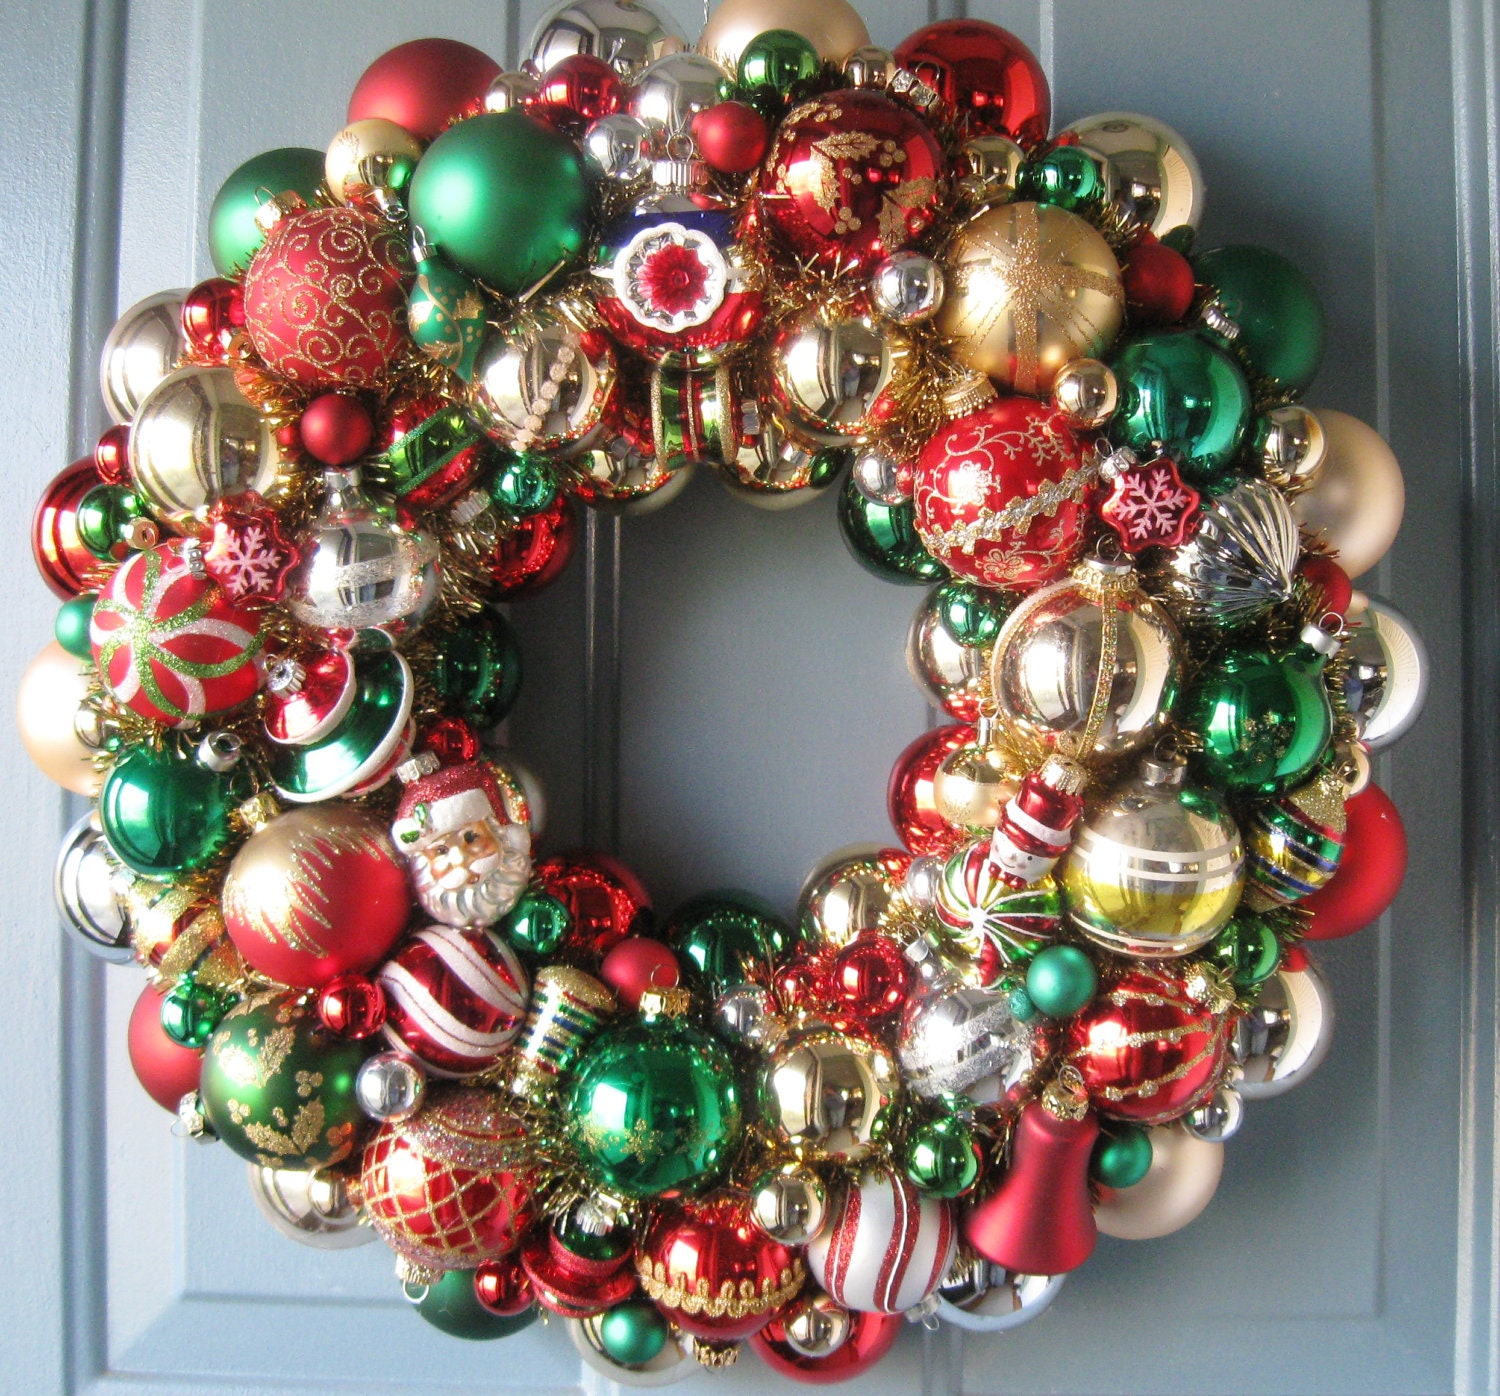 Vintage Christmas Wreath Radko Shiny Brite Ornaments by judyblank